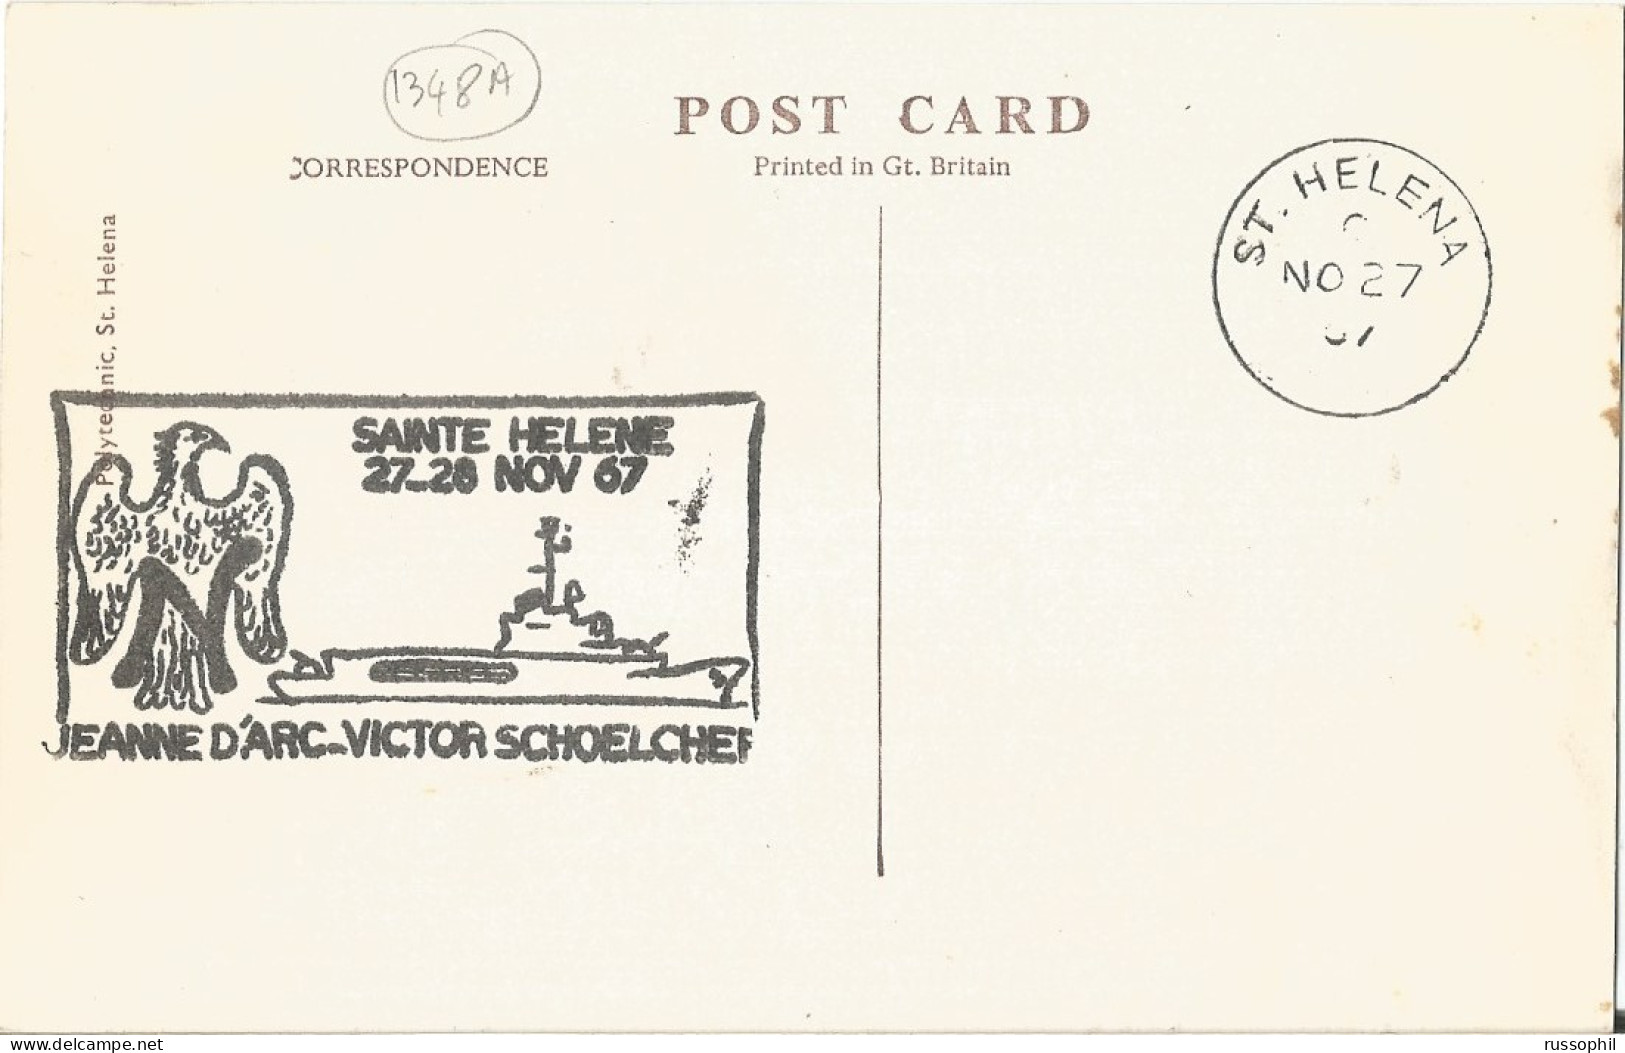 ST HELENA - LONGWOOD OLD HOUSE - PUB. POLYTECHNIC, ST  HELENA REF #3 - FRENCH WAR SHIP " JEANNE D'ARC " - 1967 - Santa Helena